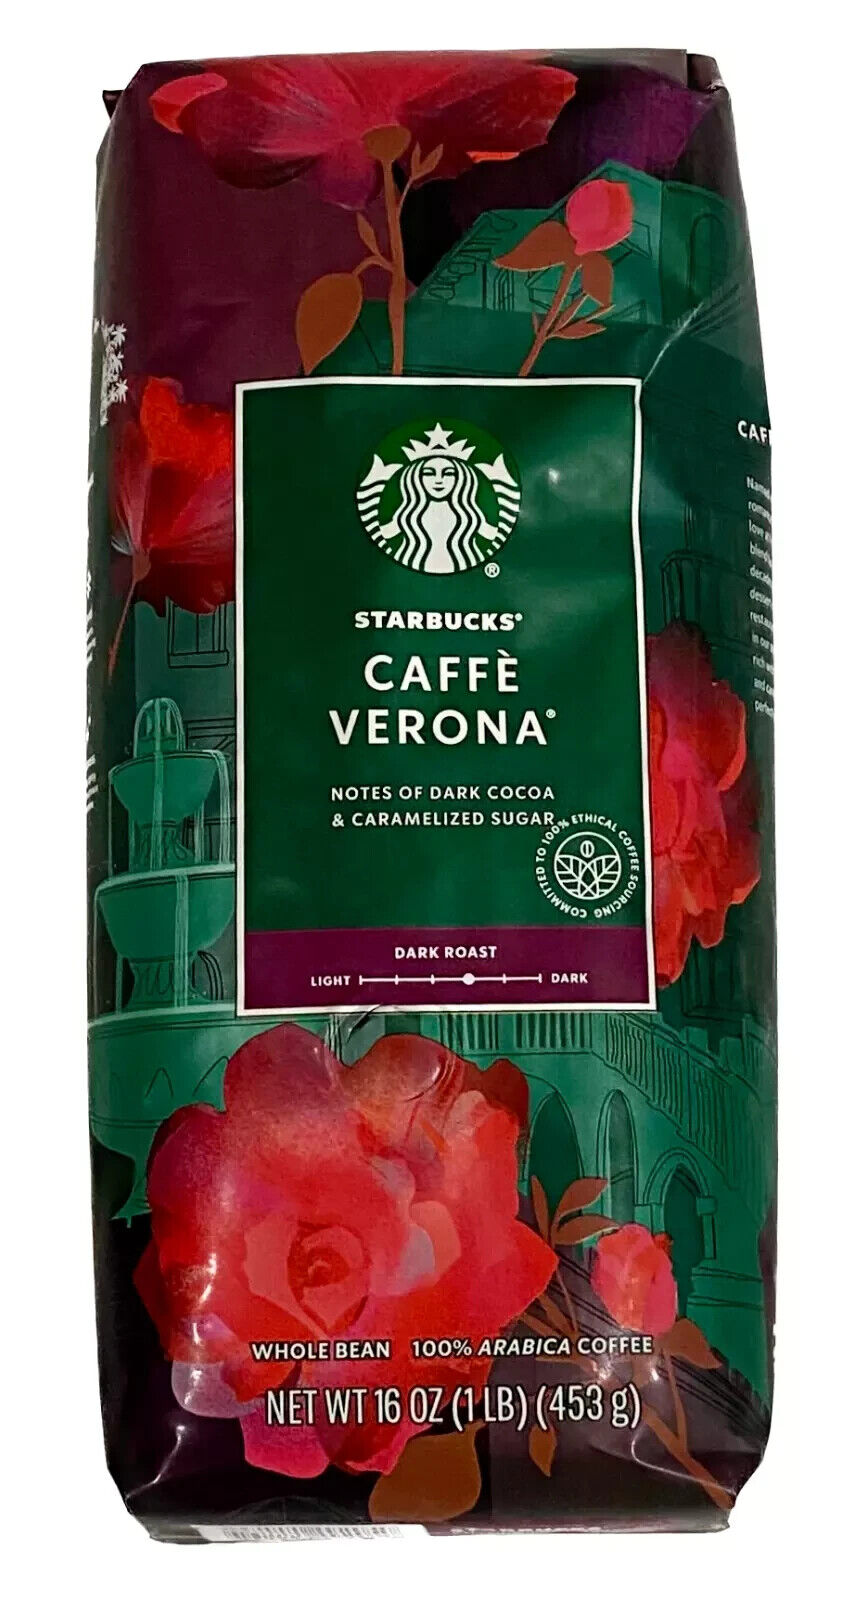 STARBUCKS CAFFE VERONA DARK COCOA & CARAMELIZED SUGAR / WHOLE BEAN 16 OZ